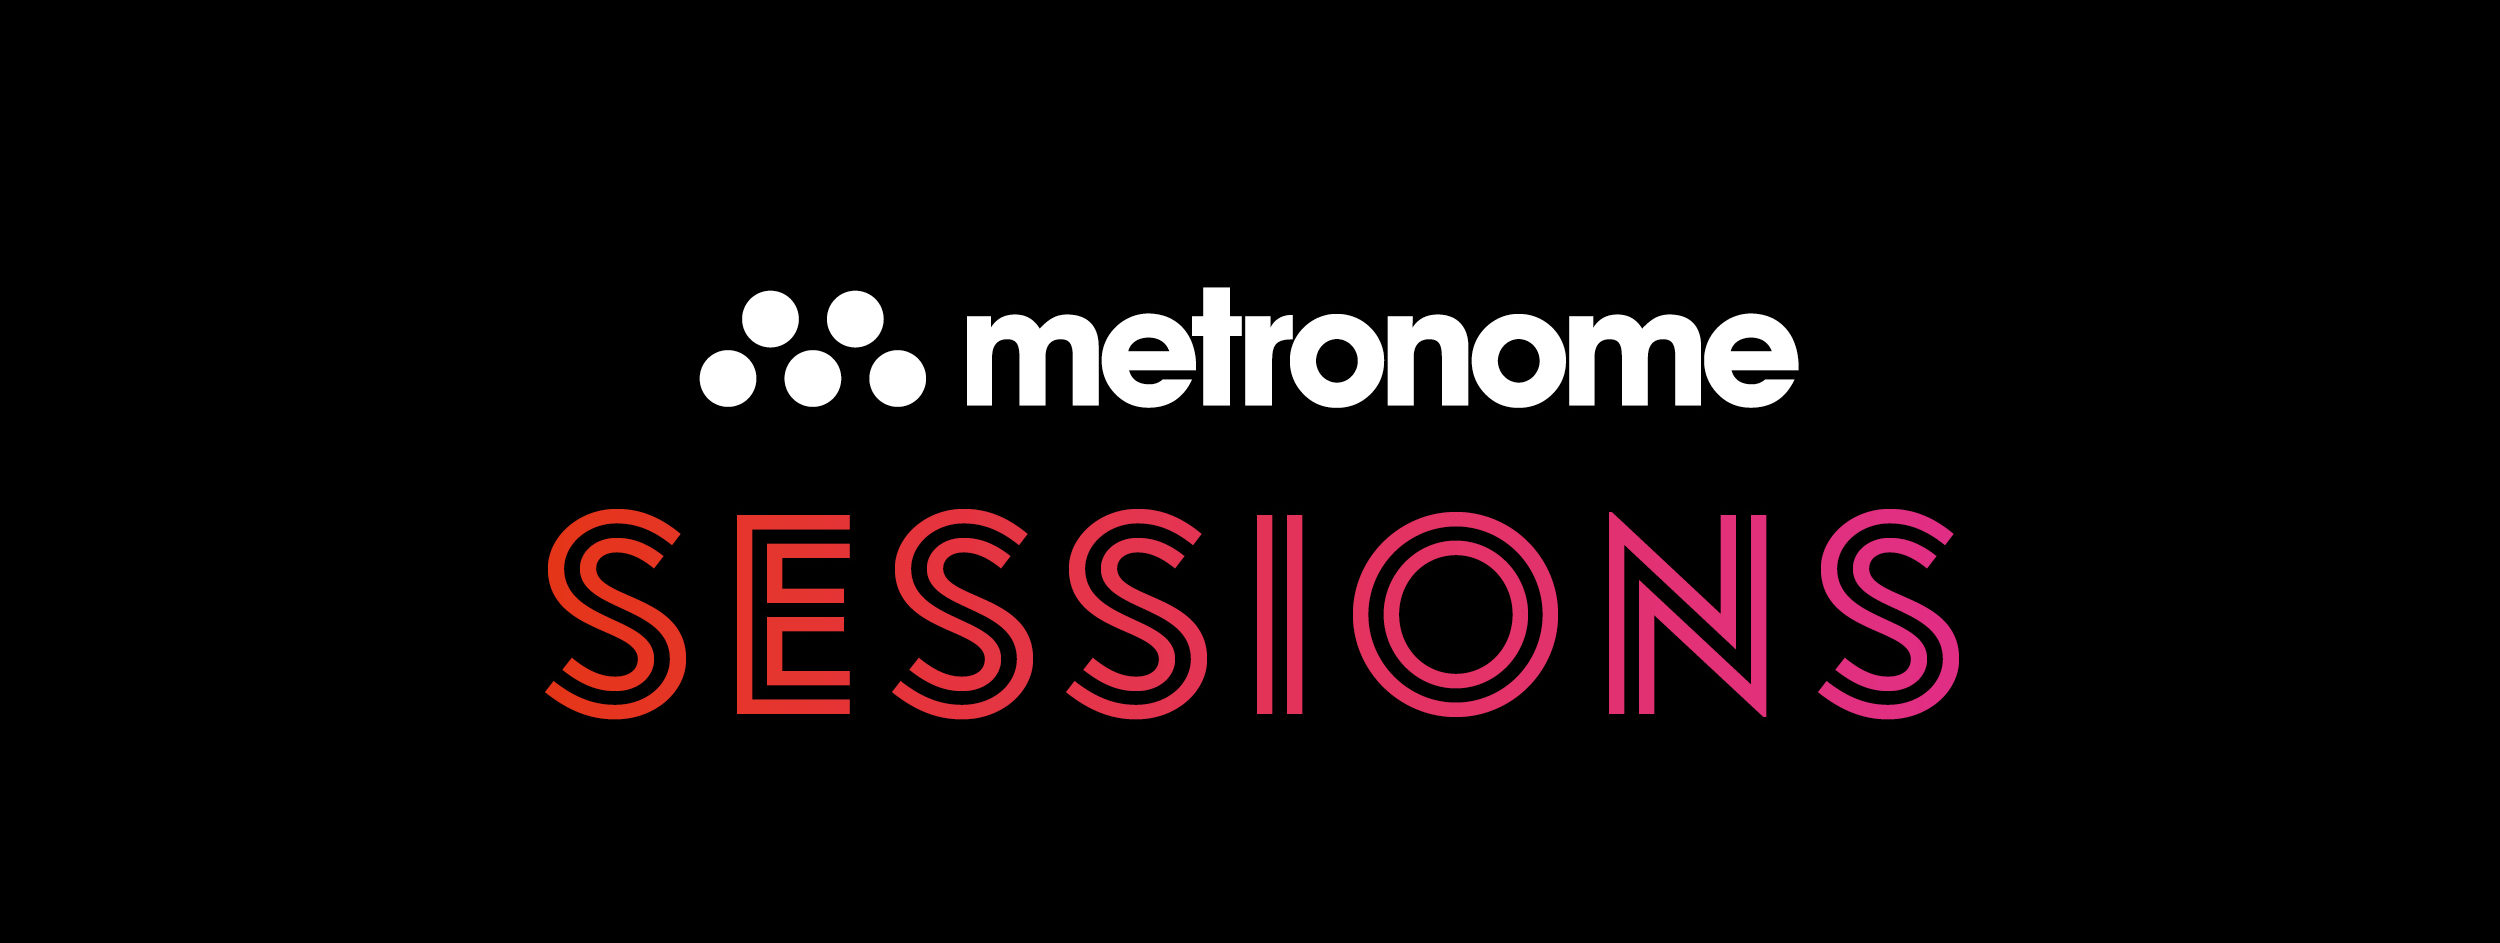 Metronome Sessions artwork